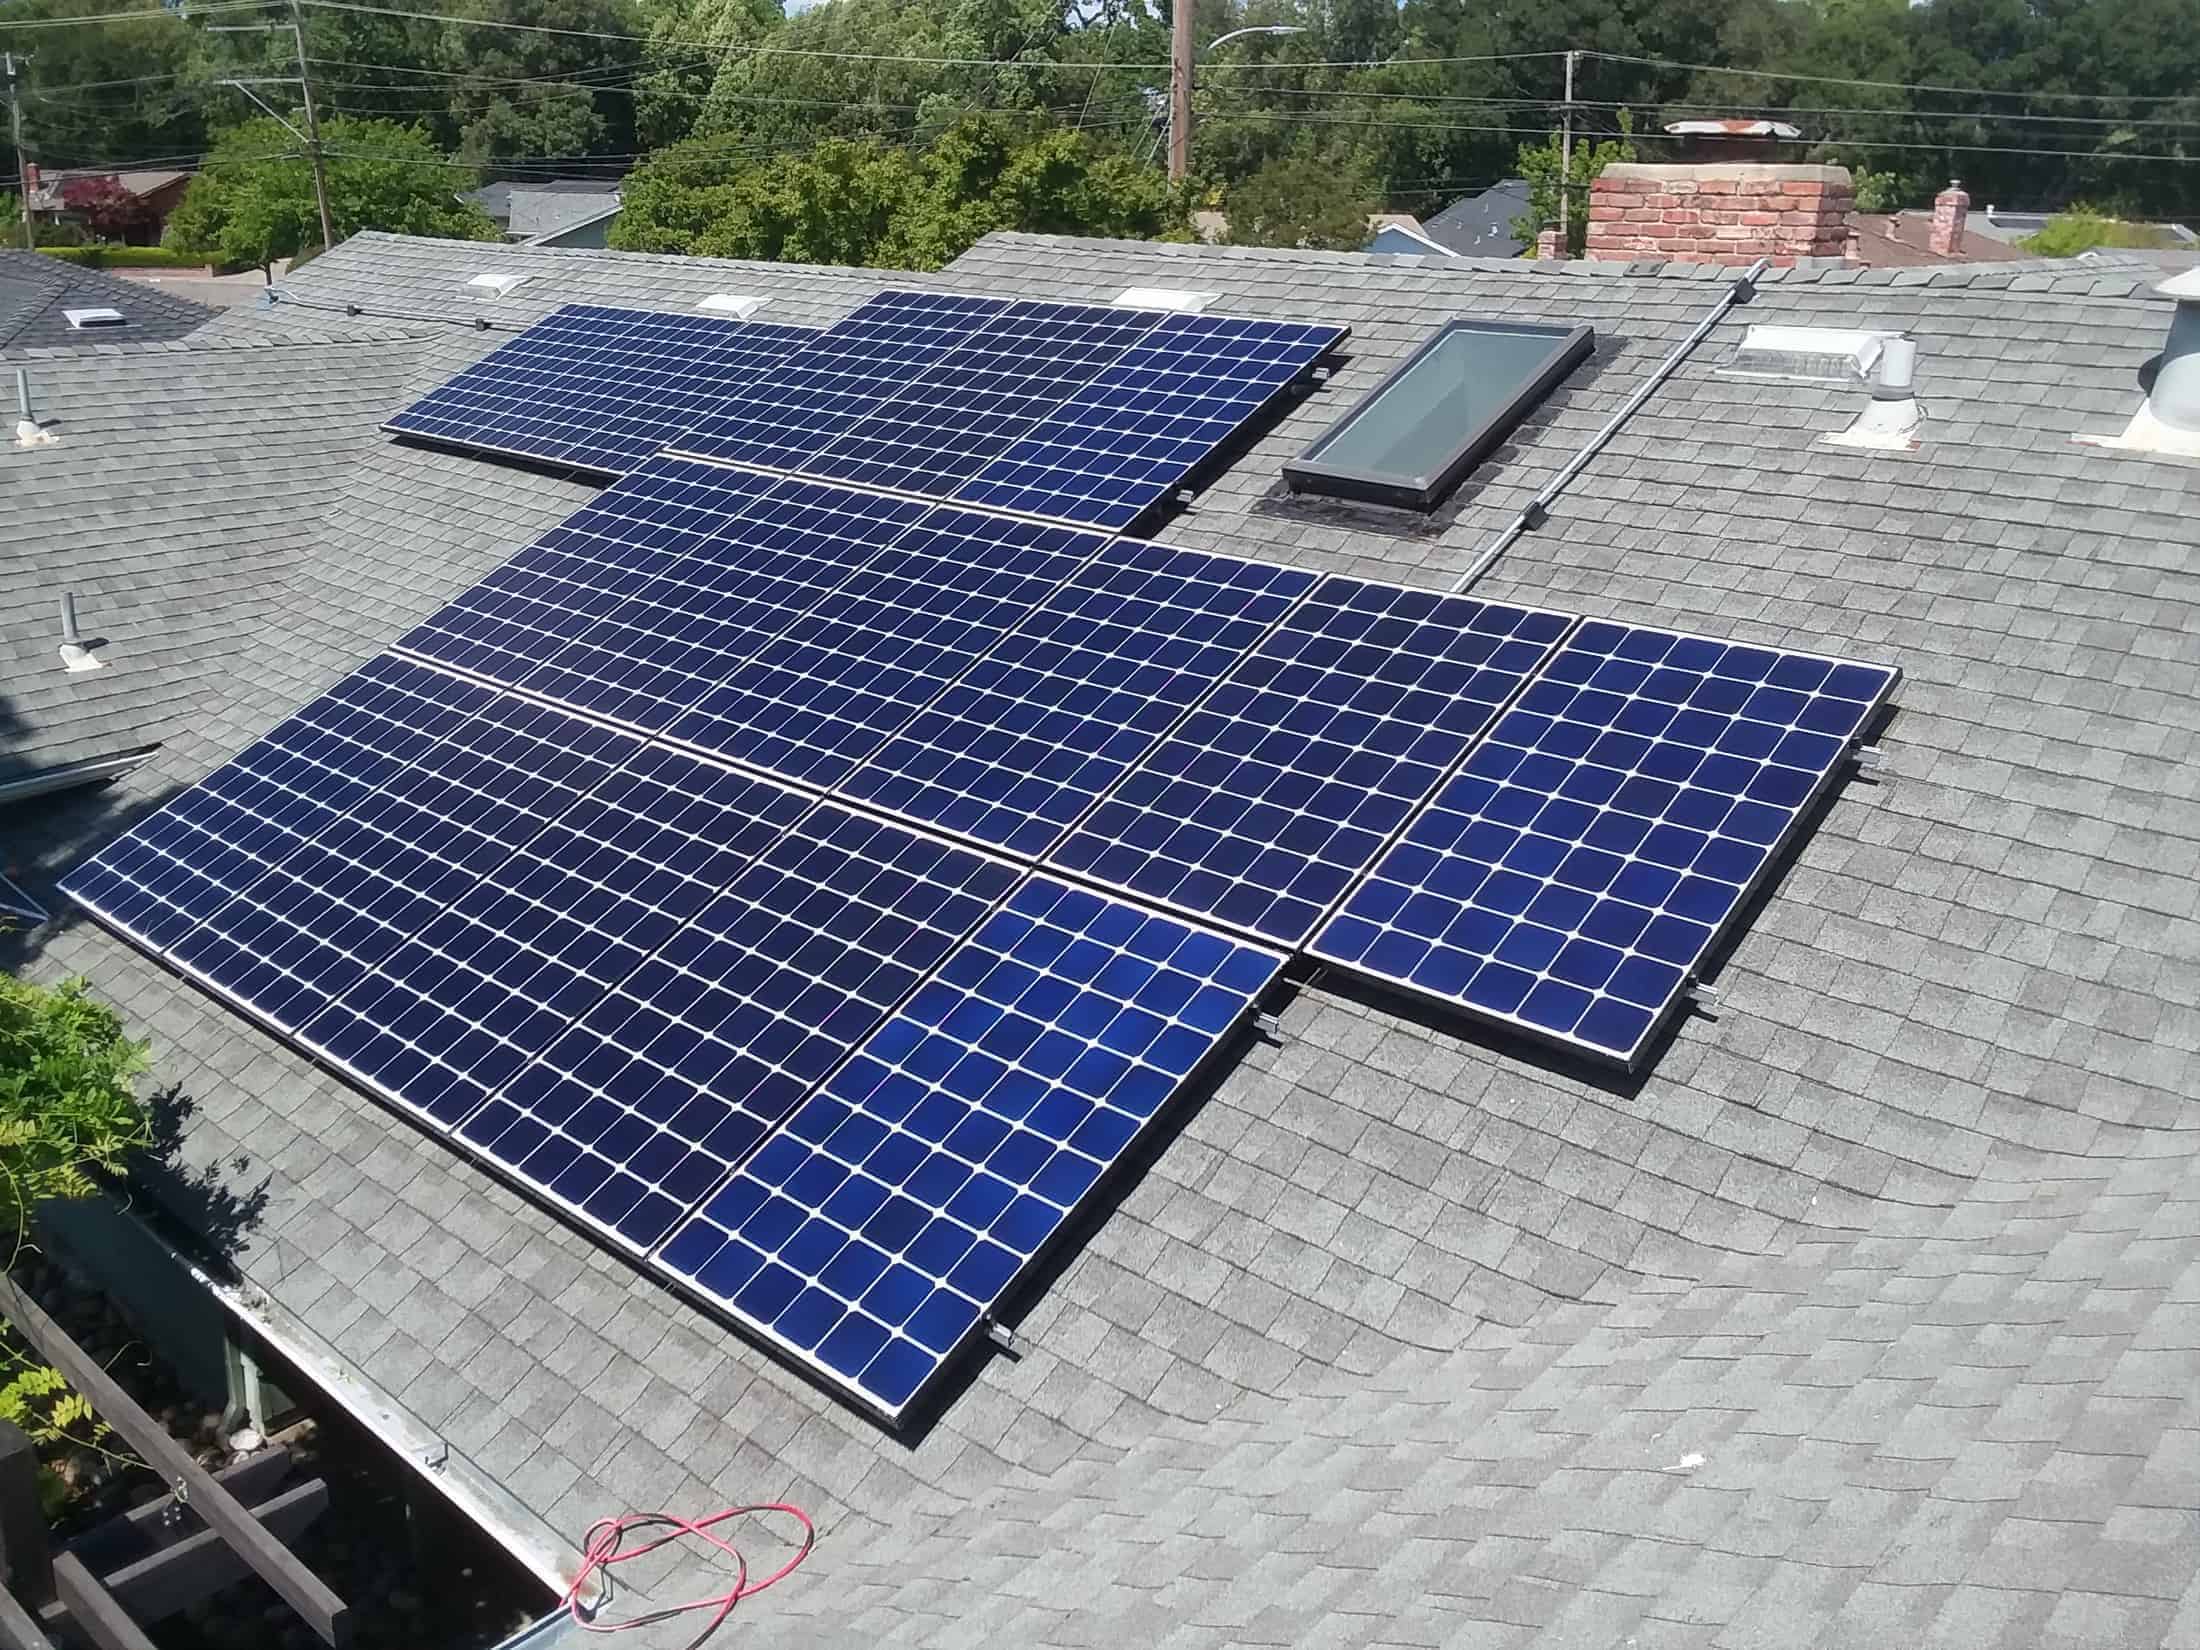 Roof top solar installation by Michael & Sun Solar